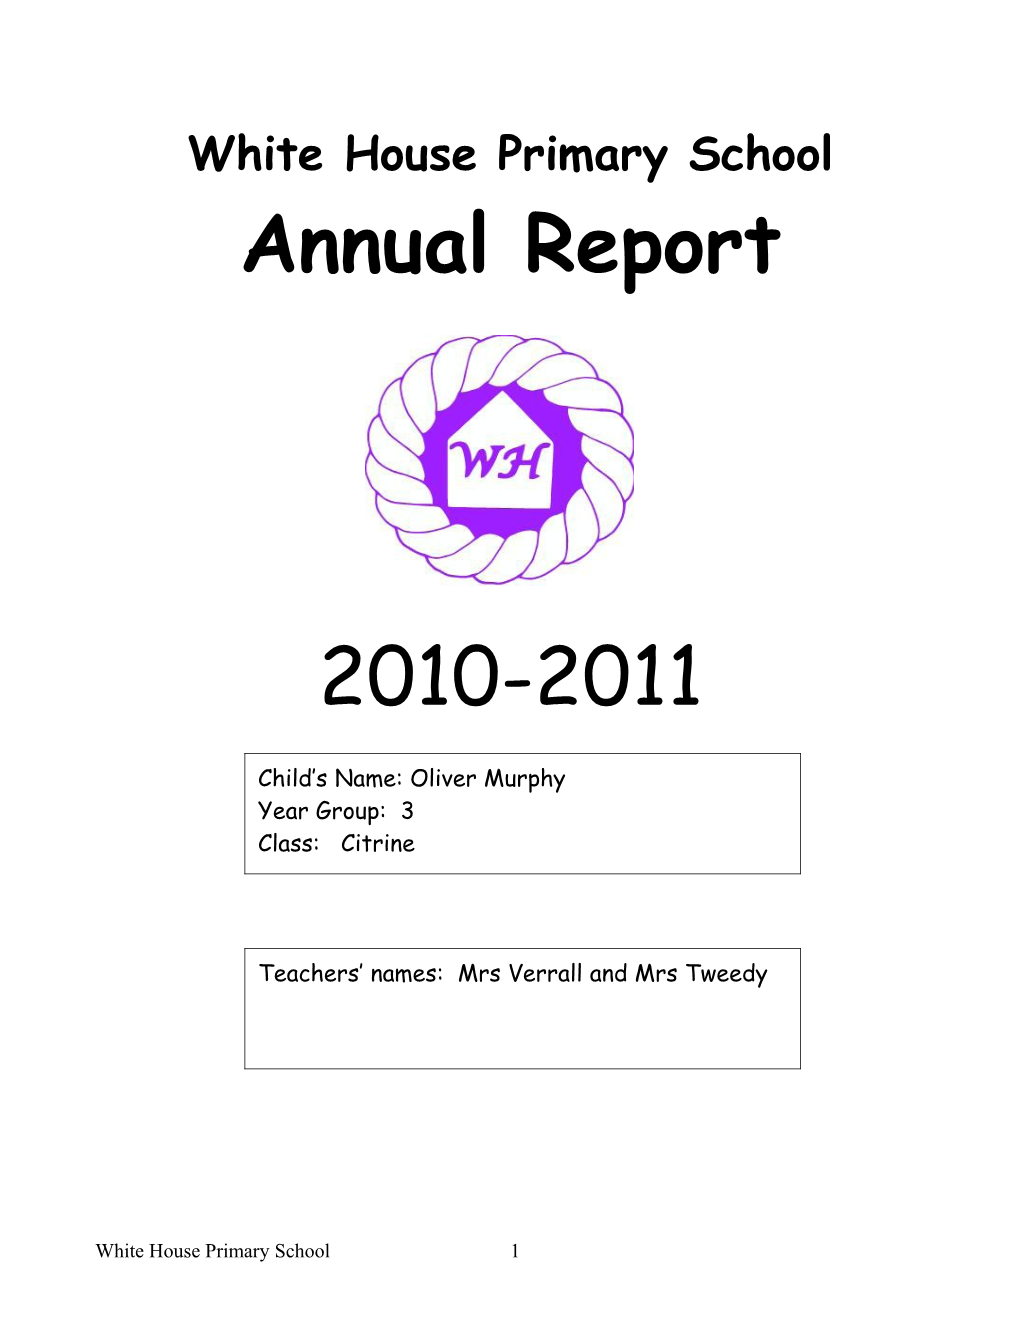 White House Primary School Annual Report